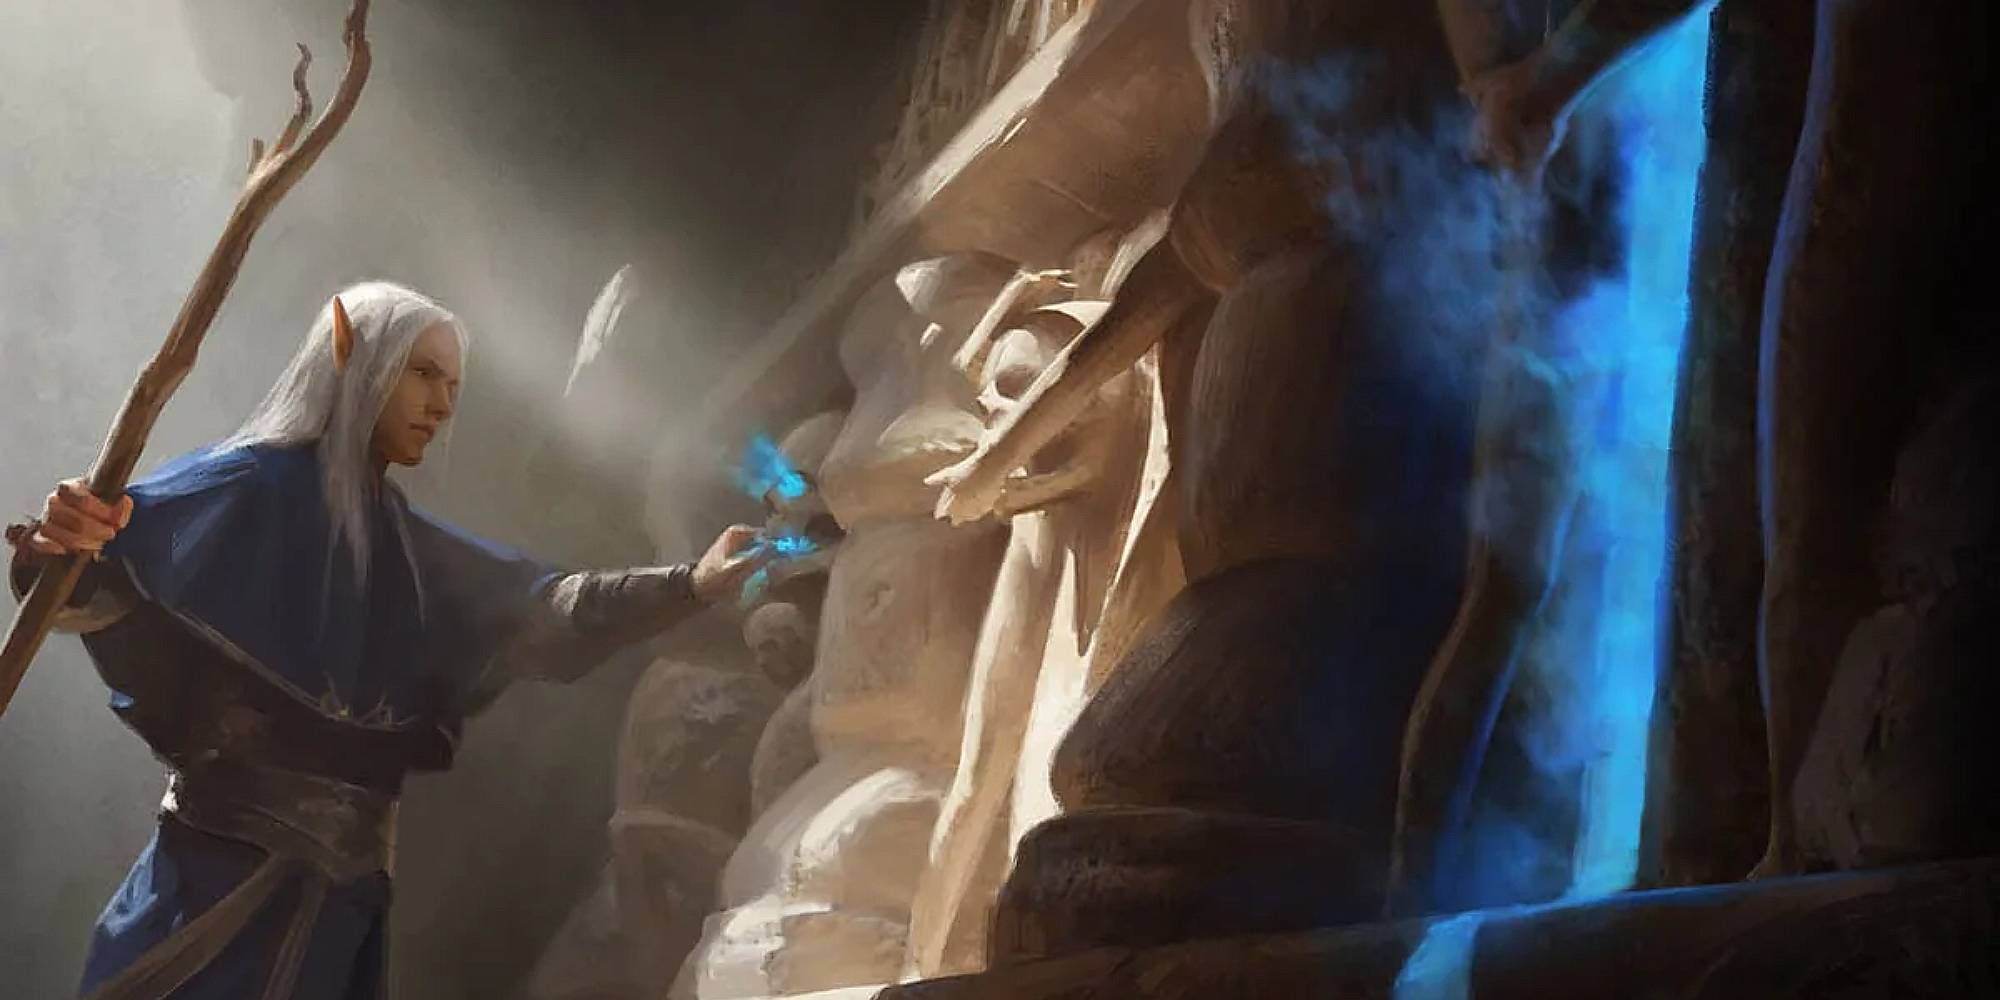 An elven man in blue robes approaches a door of blue mist in an underground environment